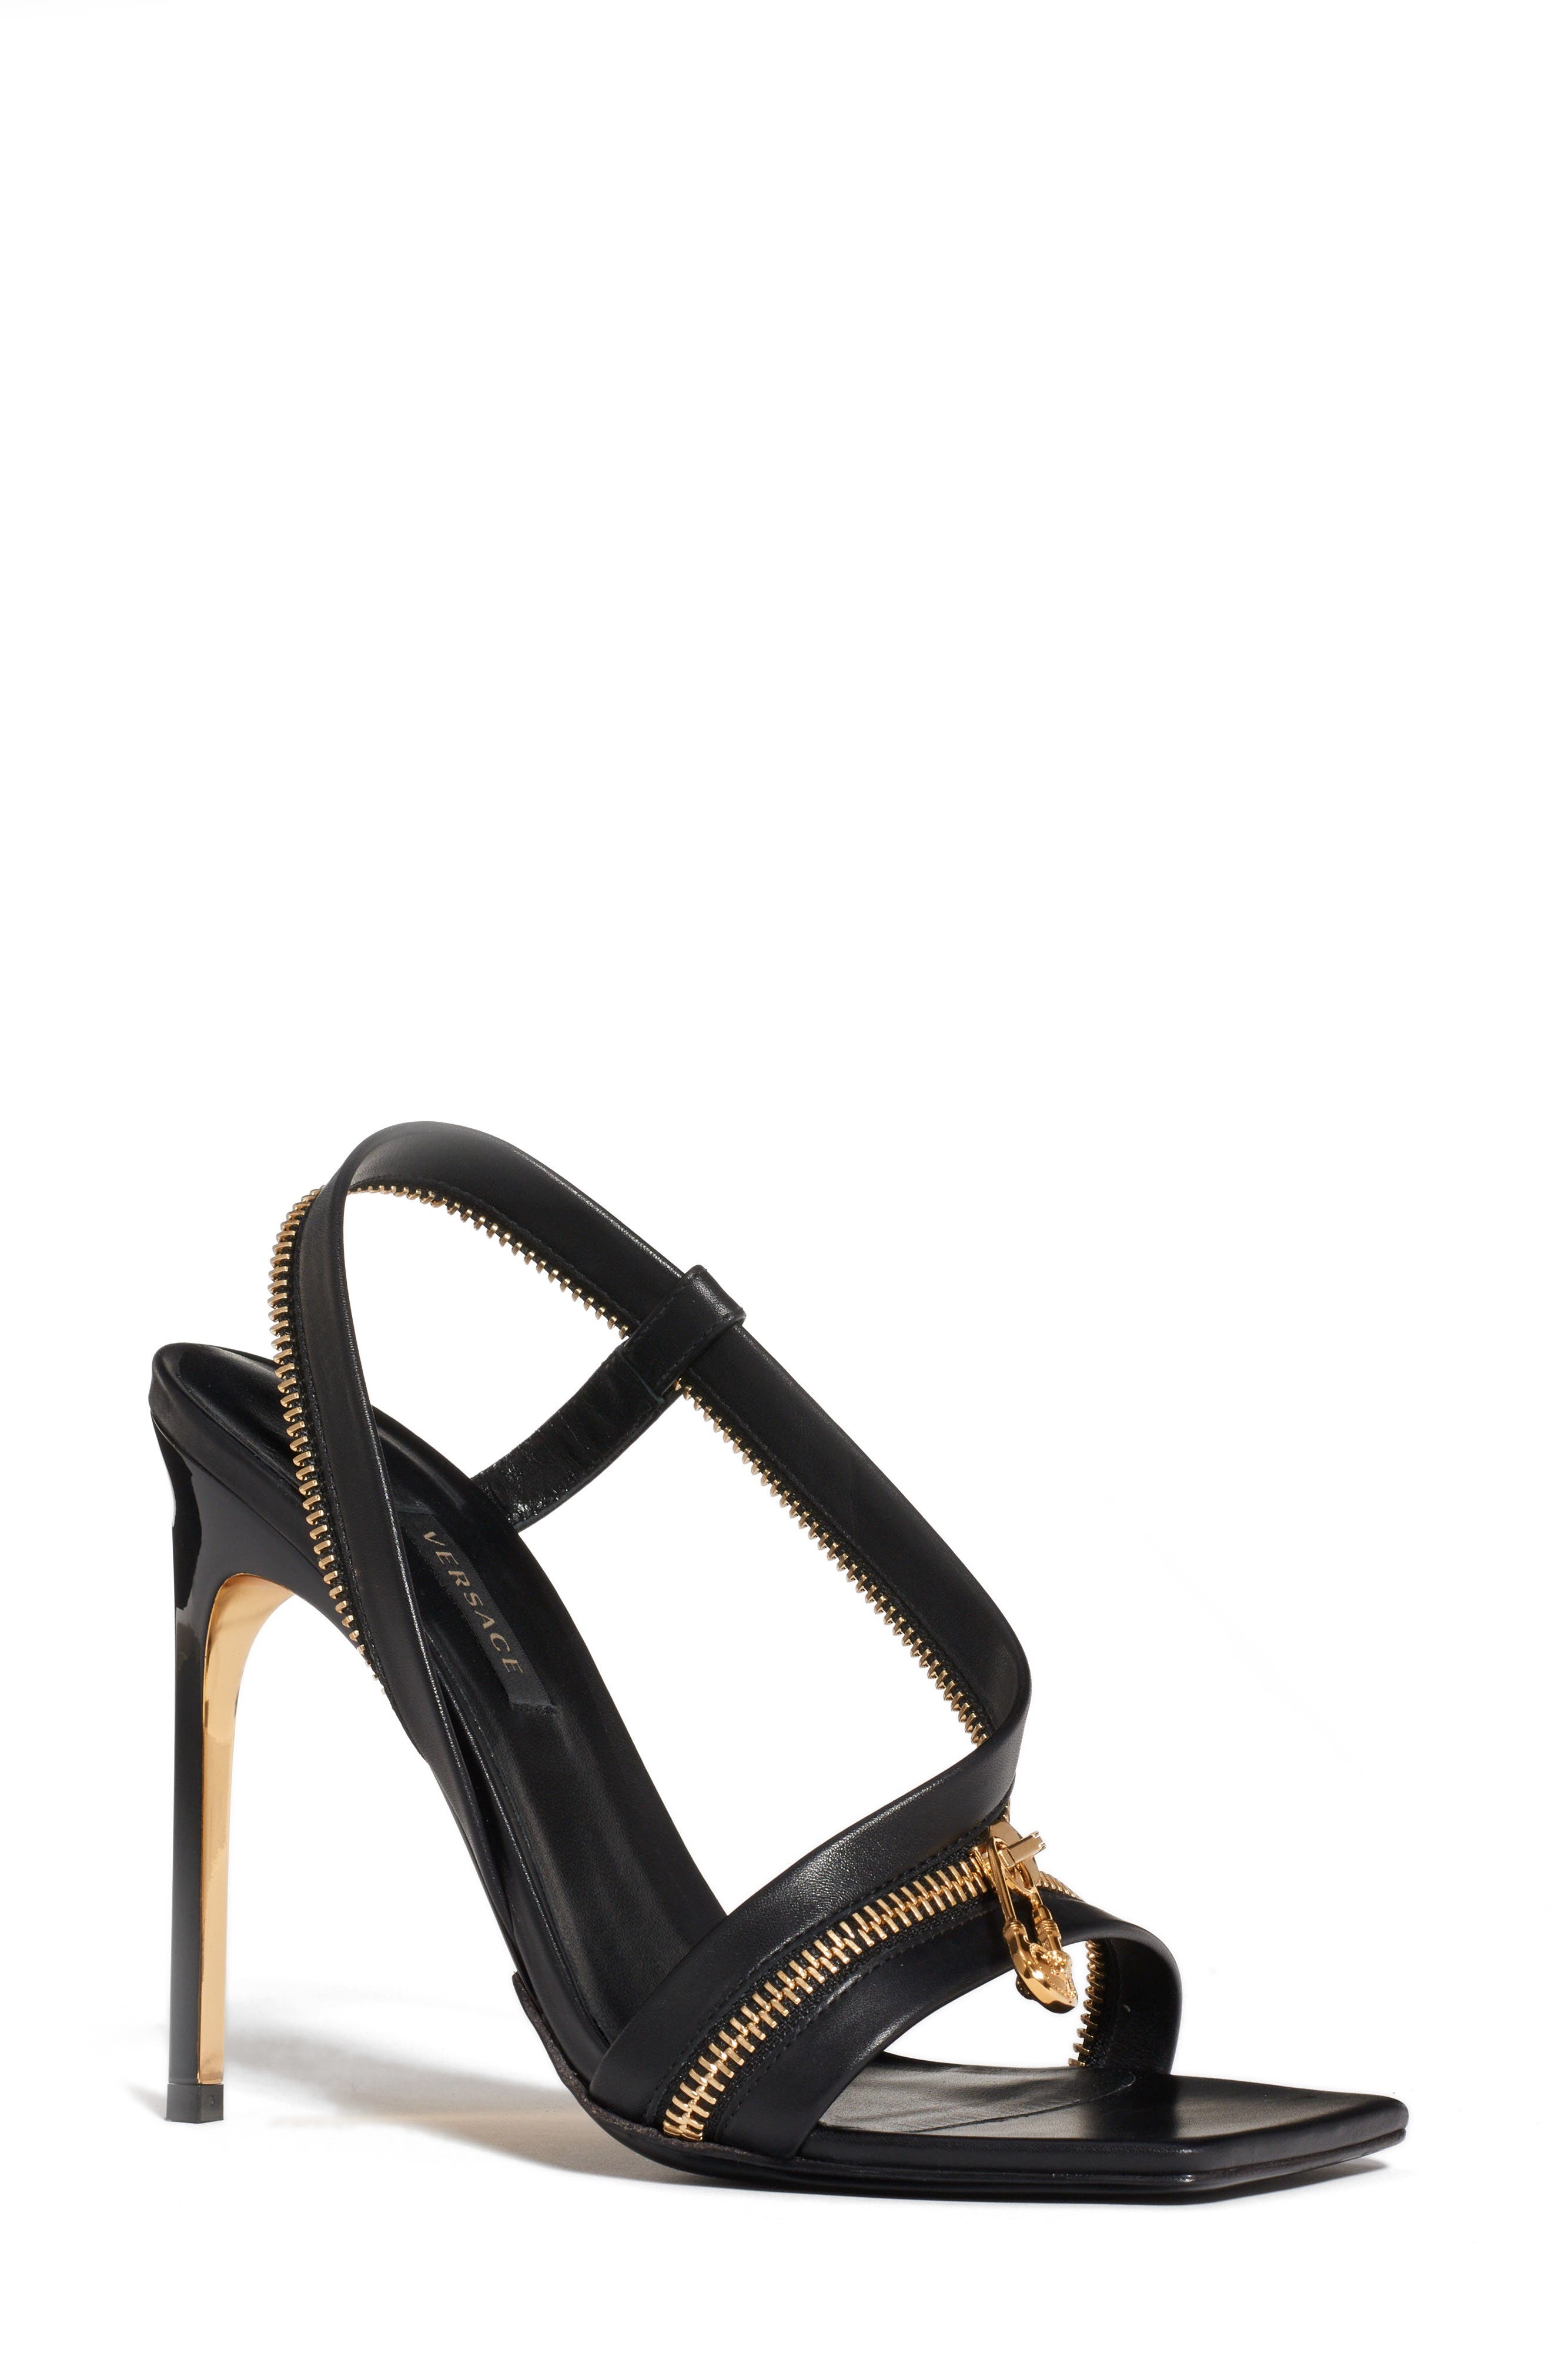 versace strappy heels